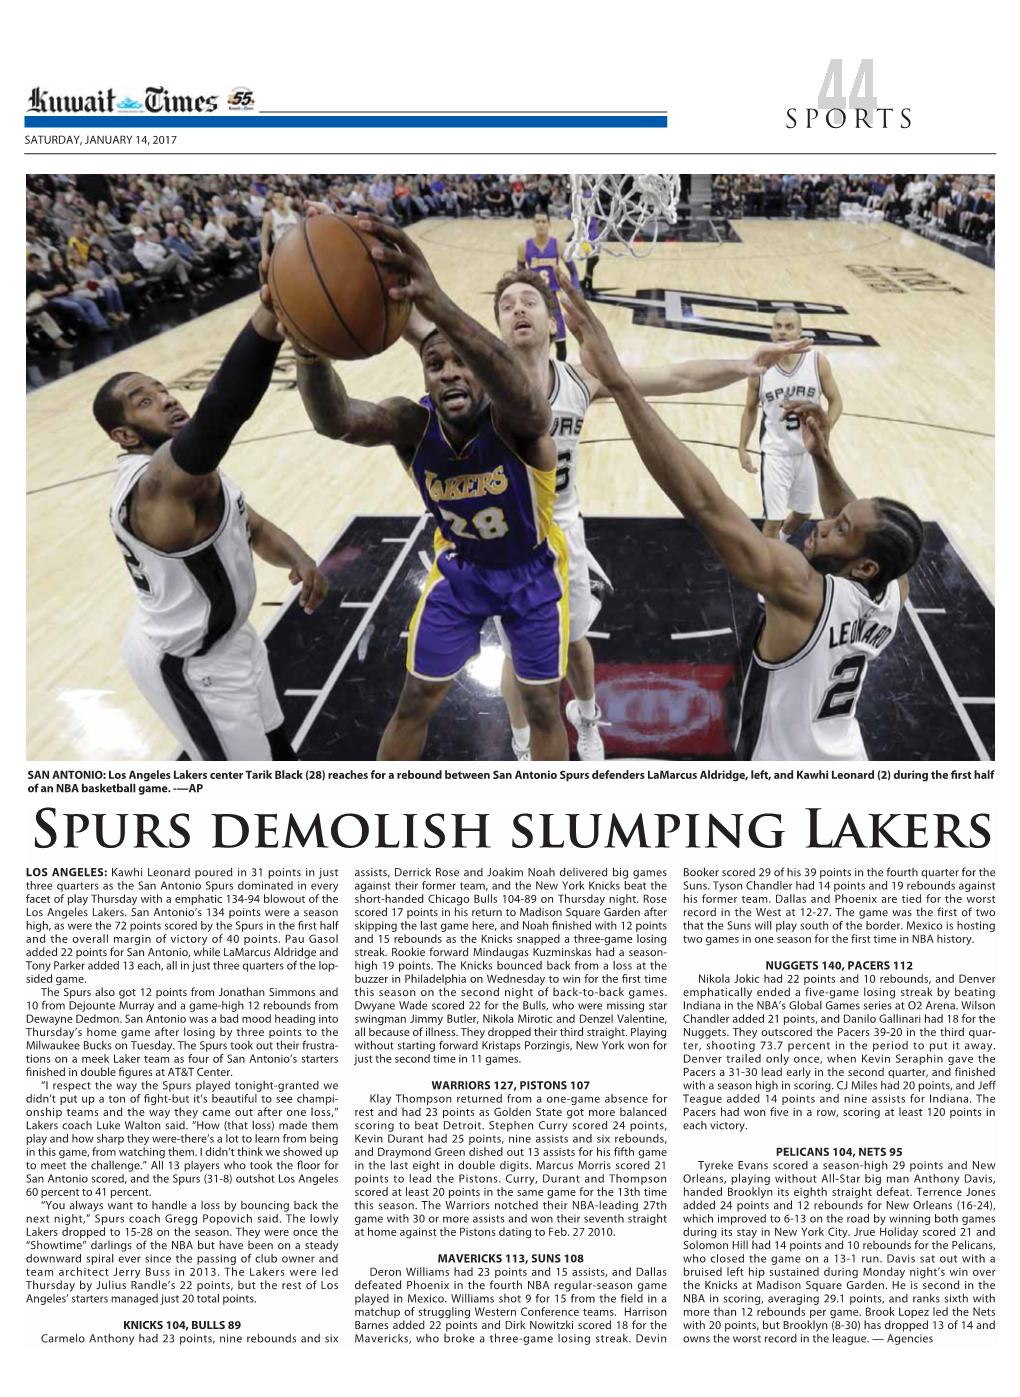 Spurs Demolish Slumping Lakers